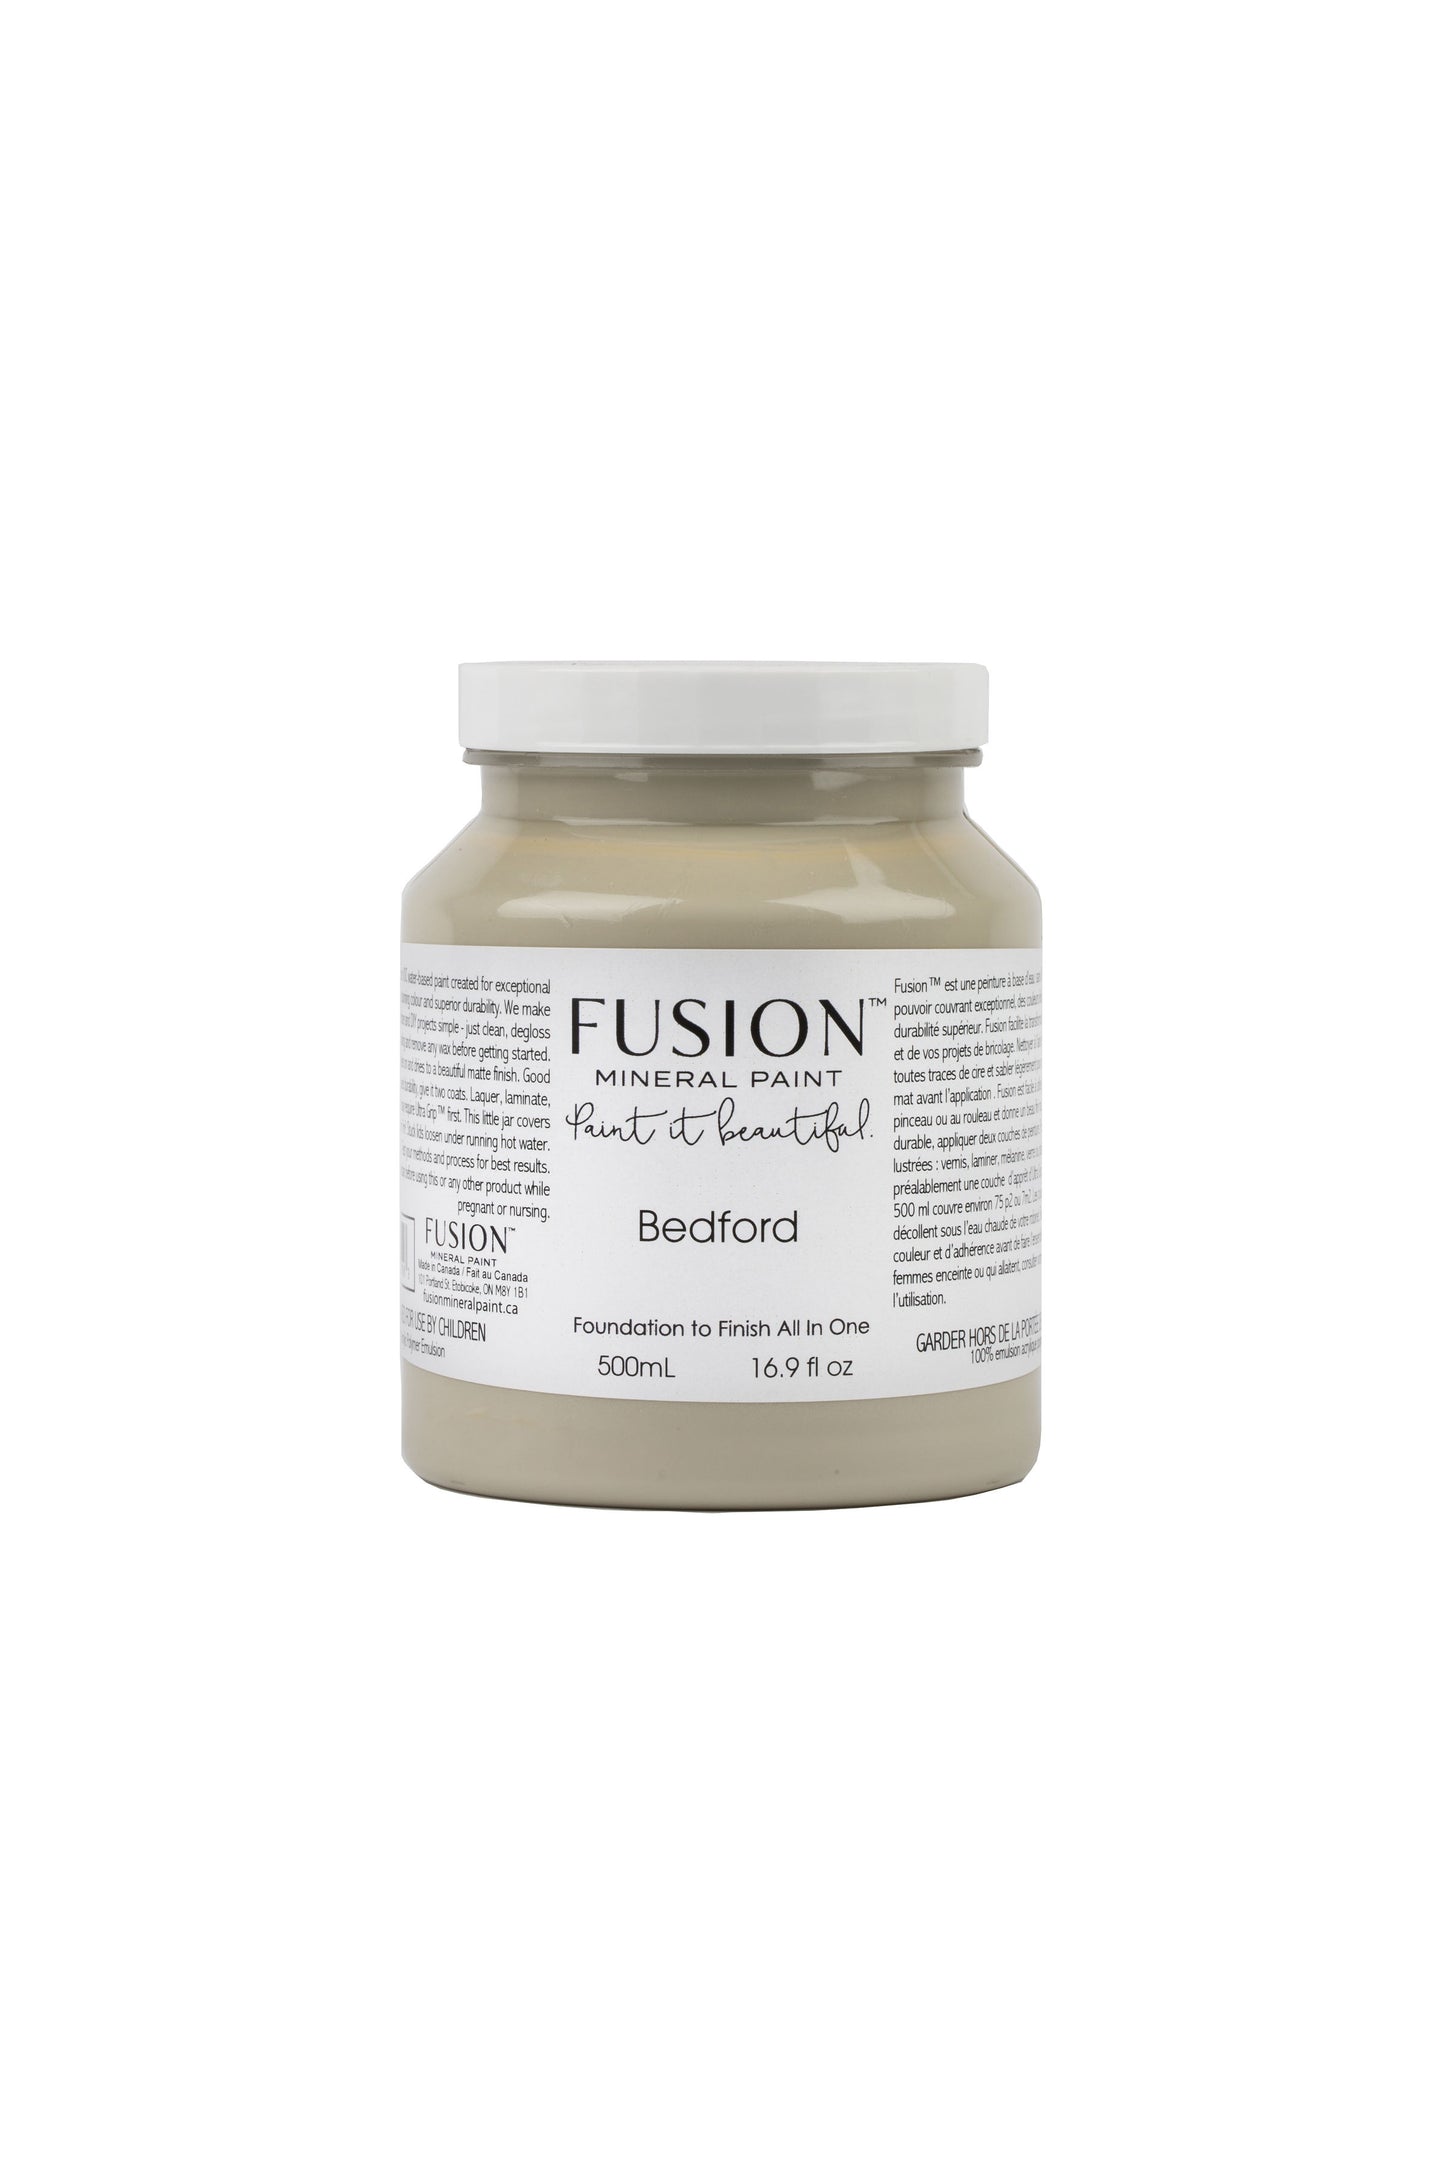 Bedford  Fusion Mineral Paint, Mid Range Neutral Grey Paint Color| 500ml Pint Size